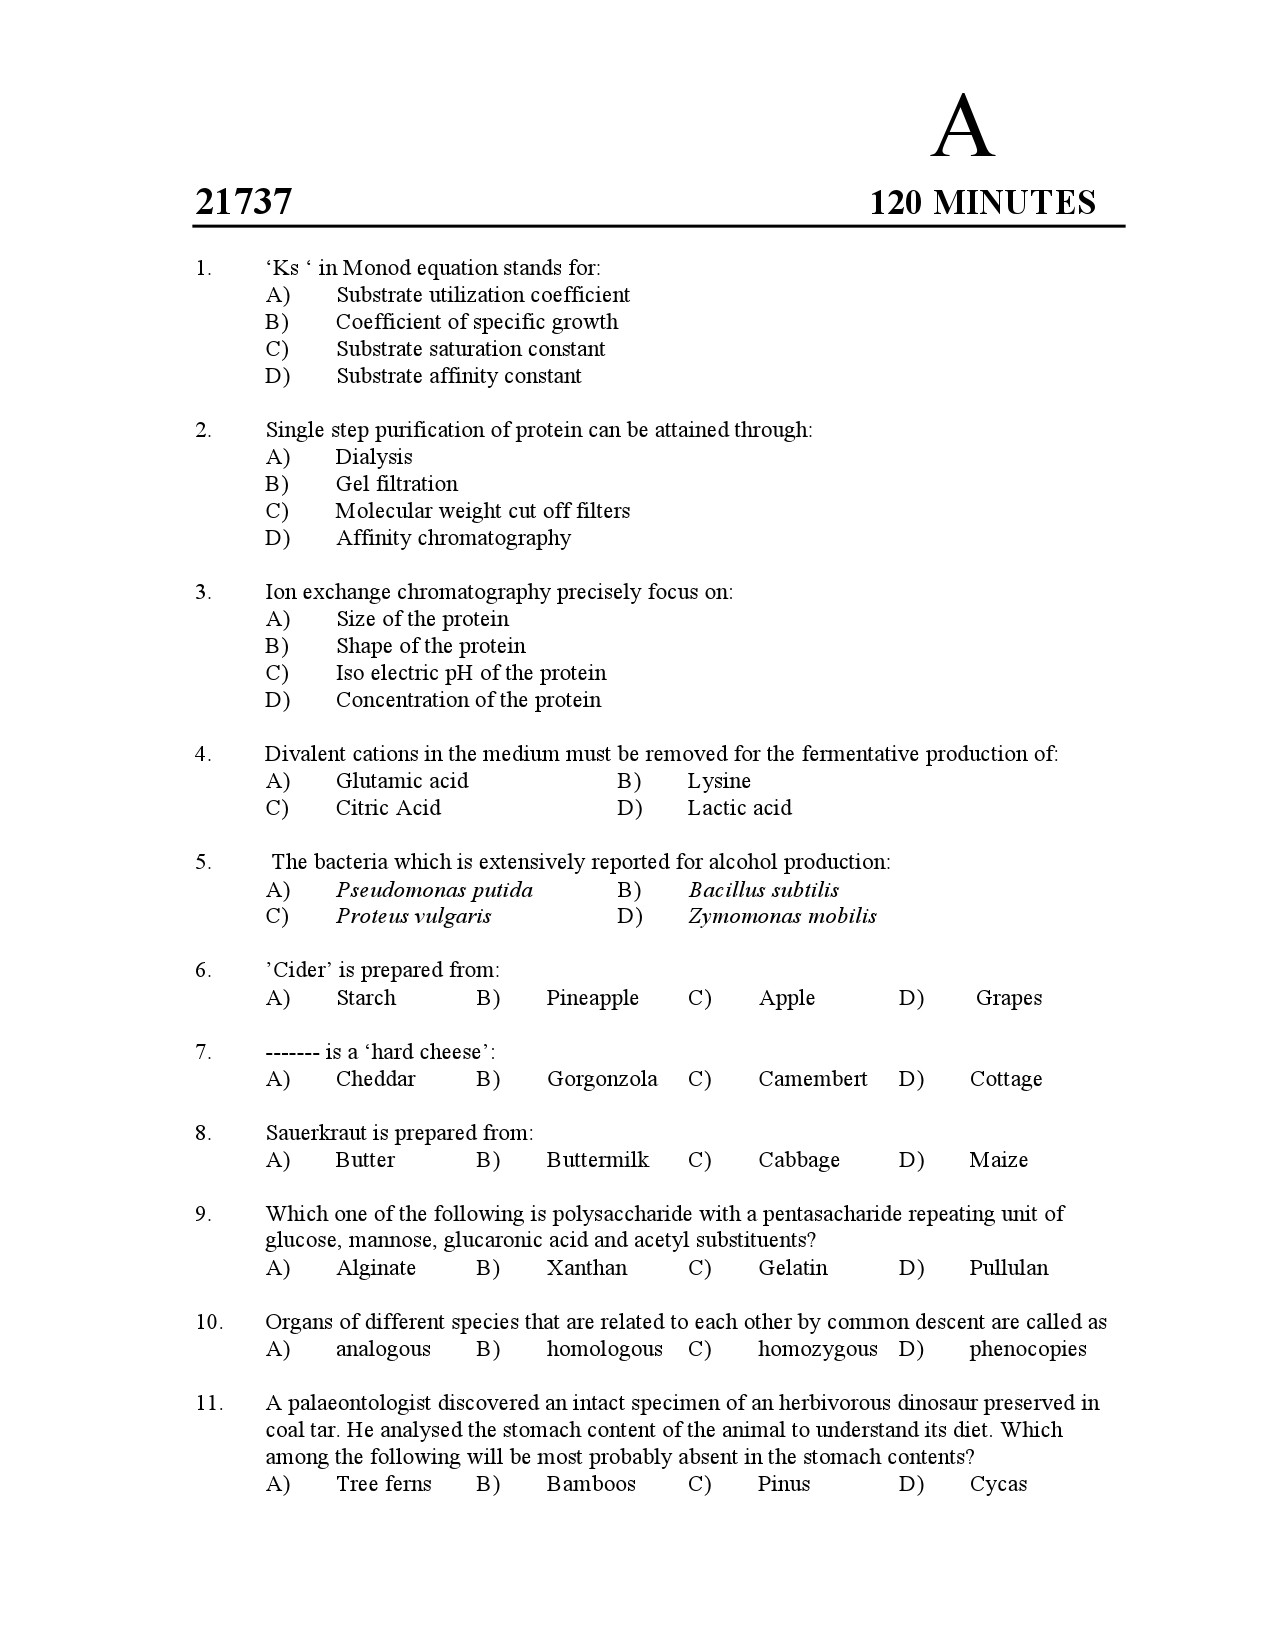 Kerala SET Biotechnology Exam Question Paper July 2021 1